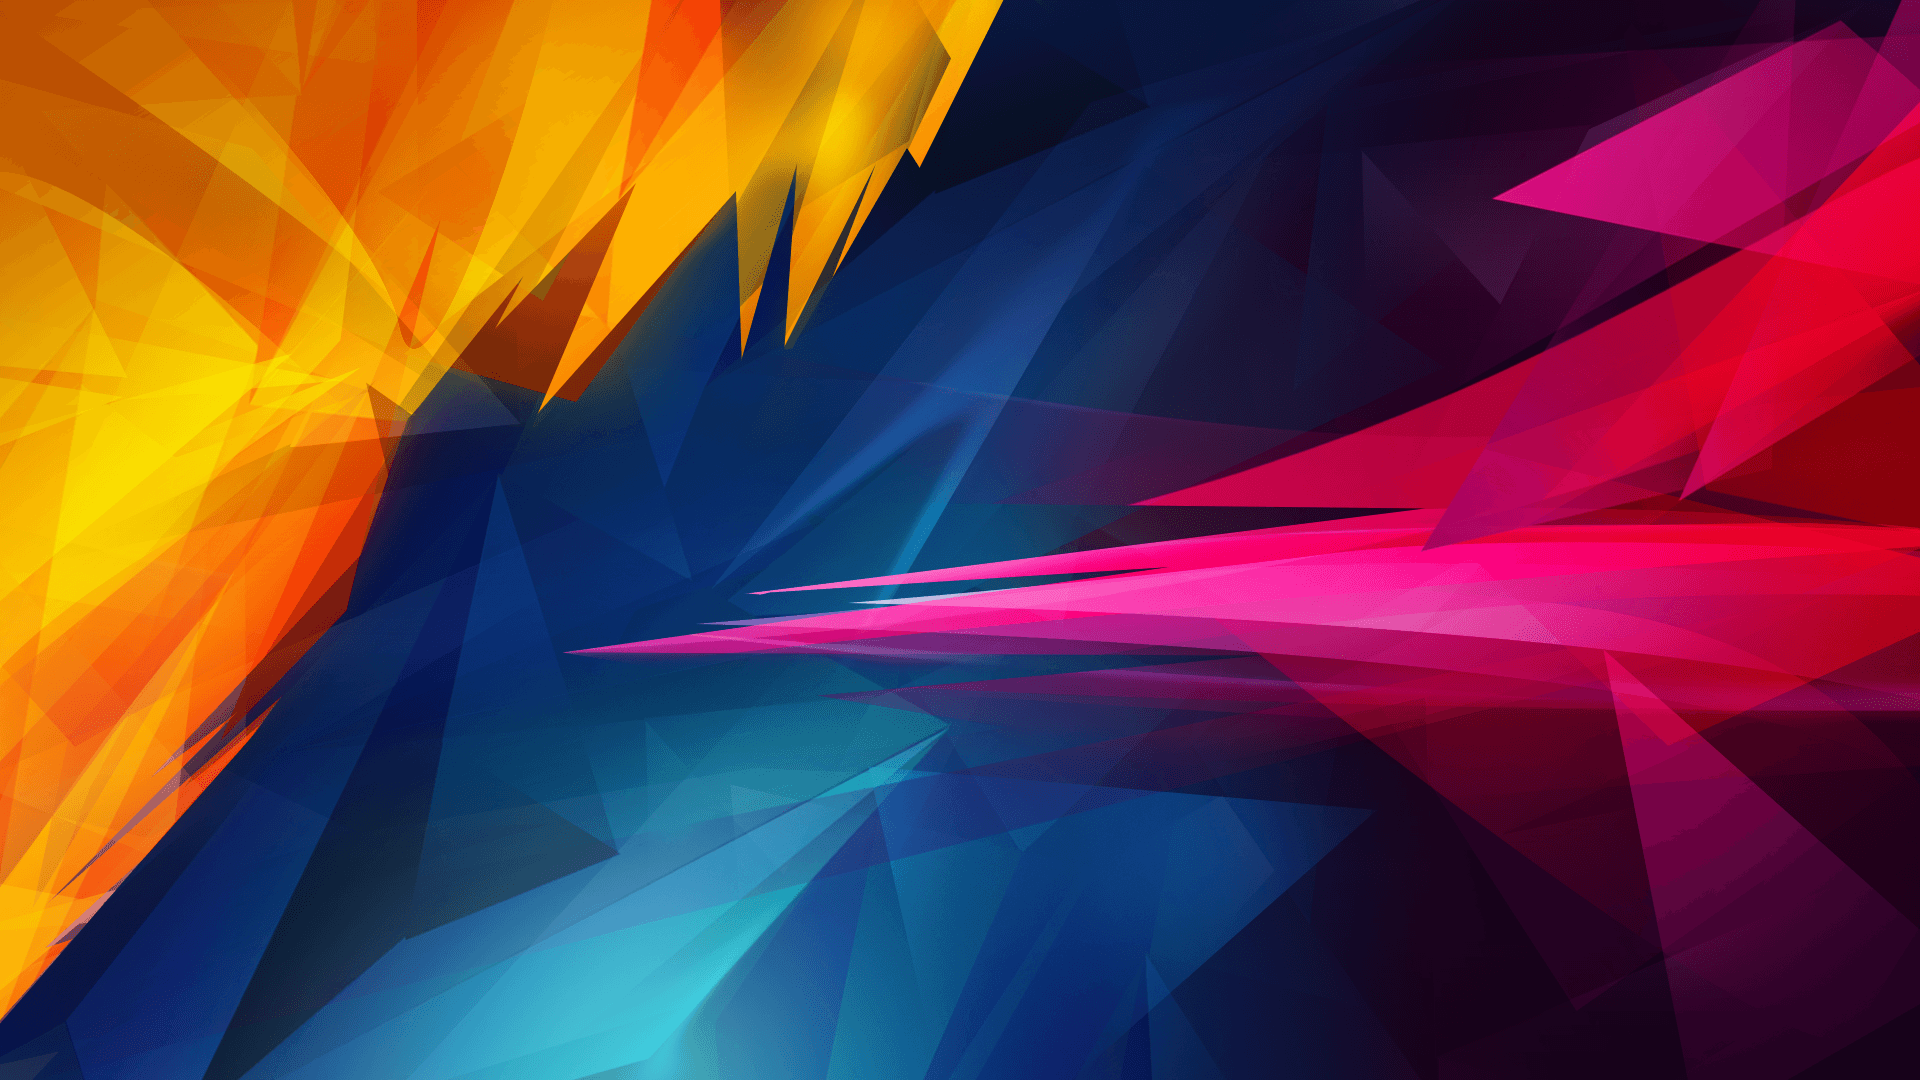 Colorful Abstract 3D Illustration Desktop Wallpaper